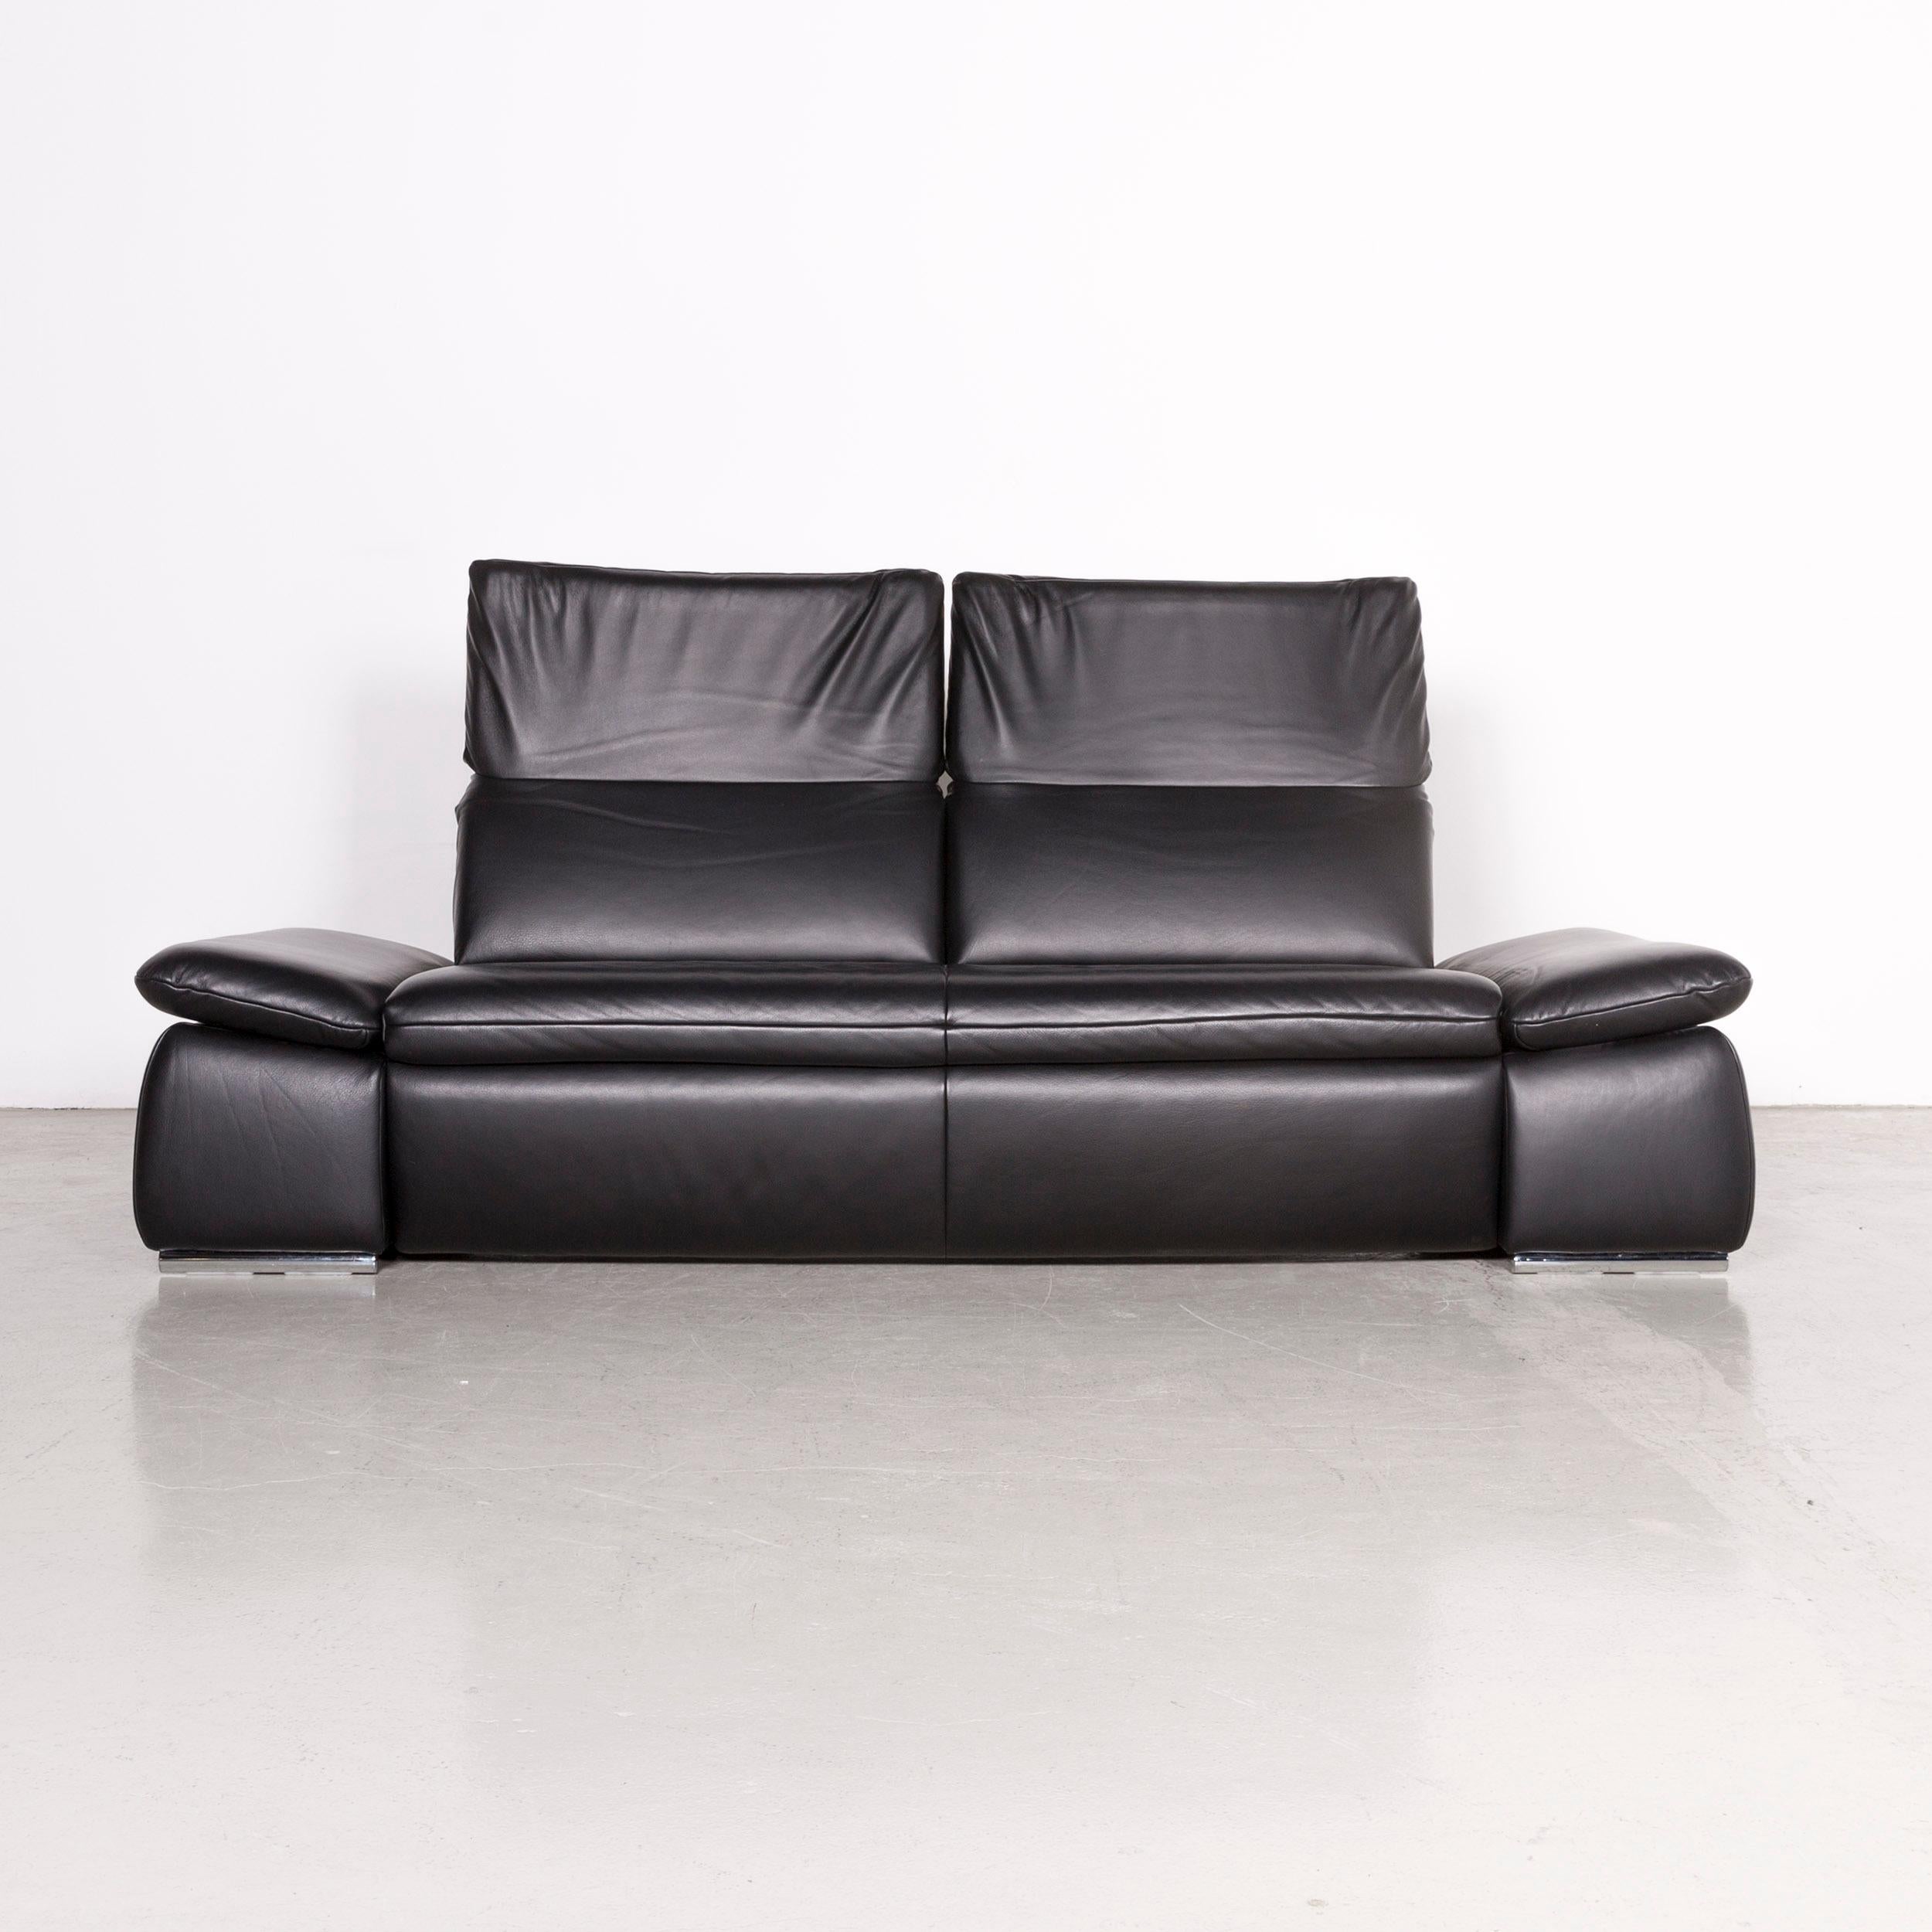 Koinor Evento Designer Sofa Black Three-Seat Leather Couch In Good Condition For Sale In Cologne, DE